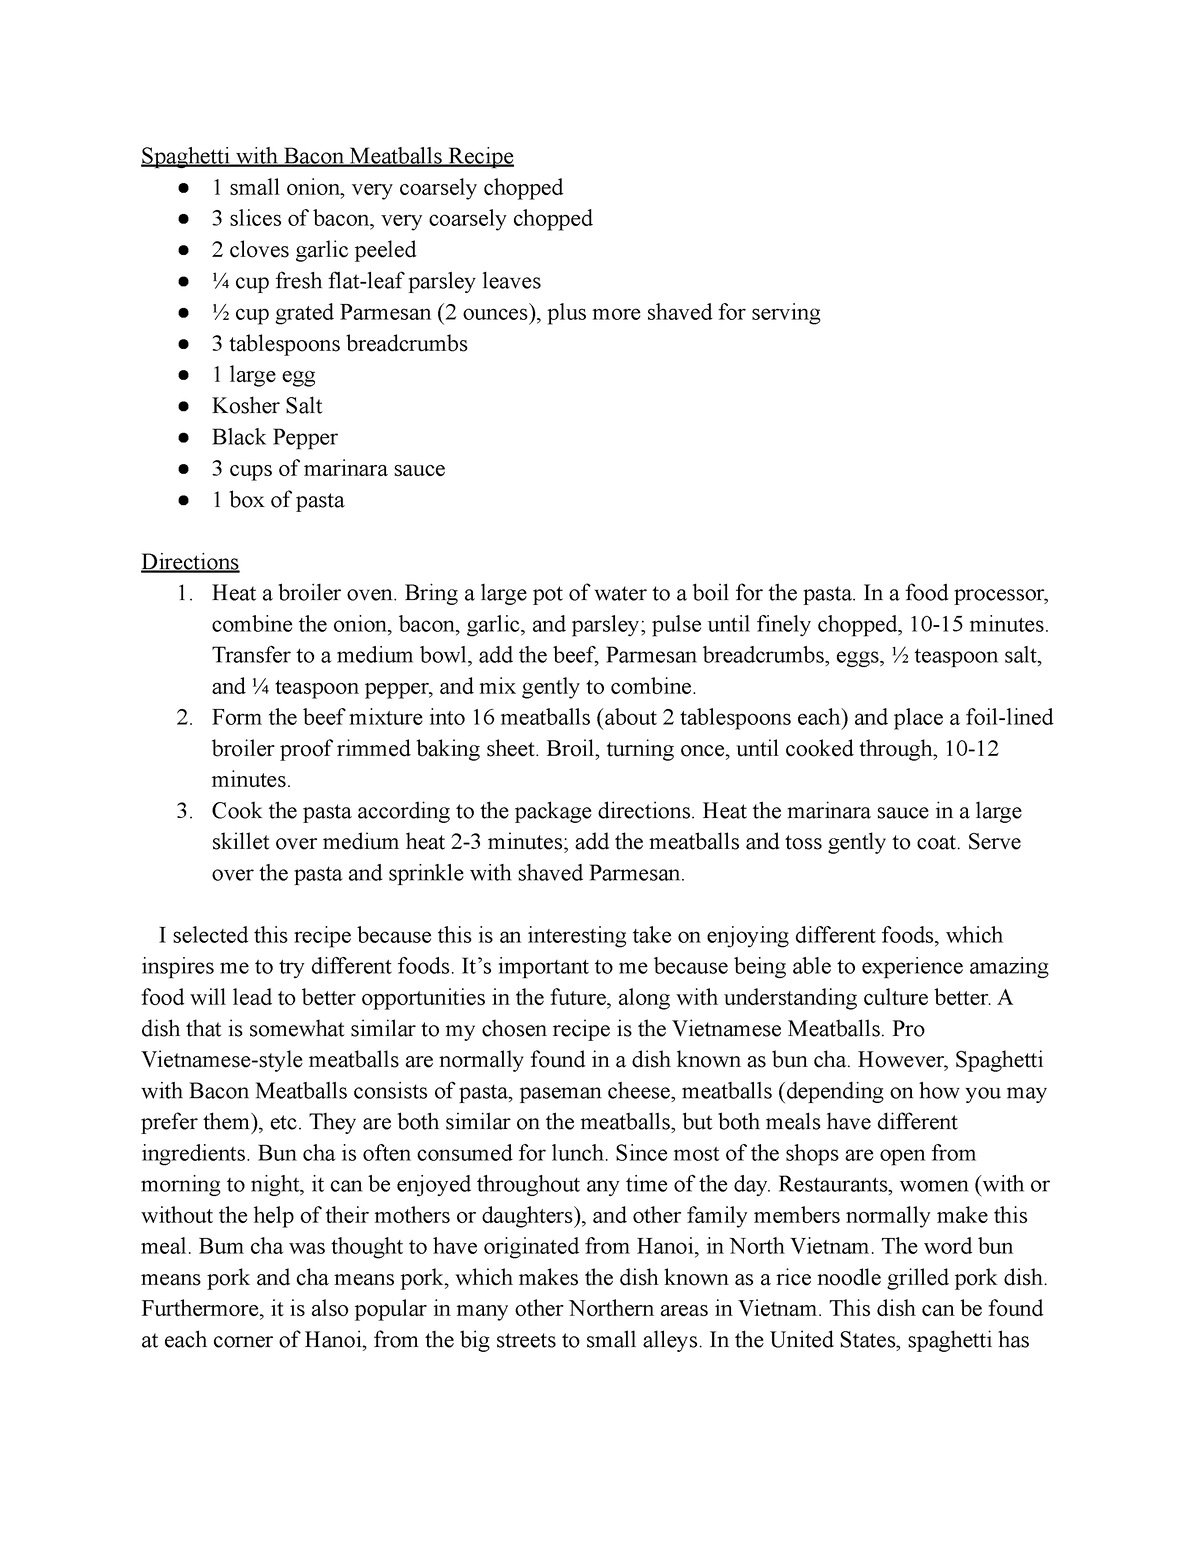 Journal #3 Recipe Analysis - Spaghetti with Bacon Meatballs Recipe 1 ...